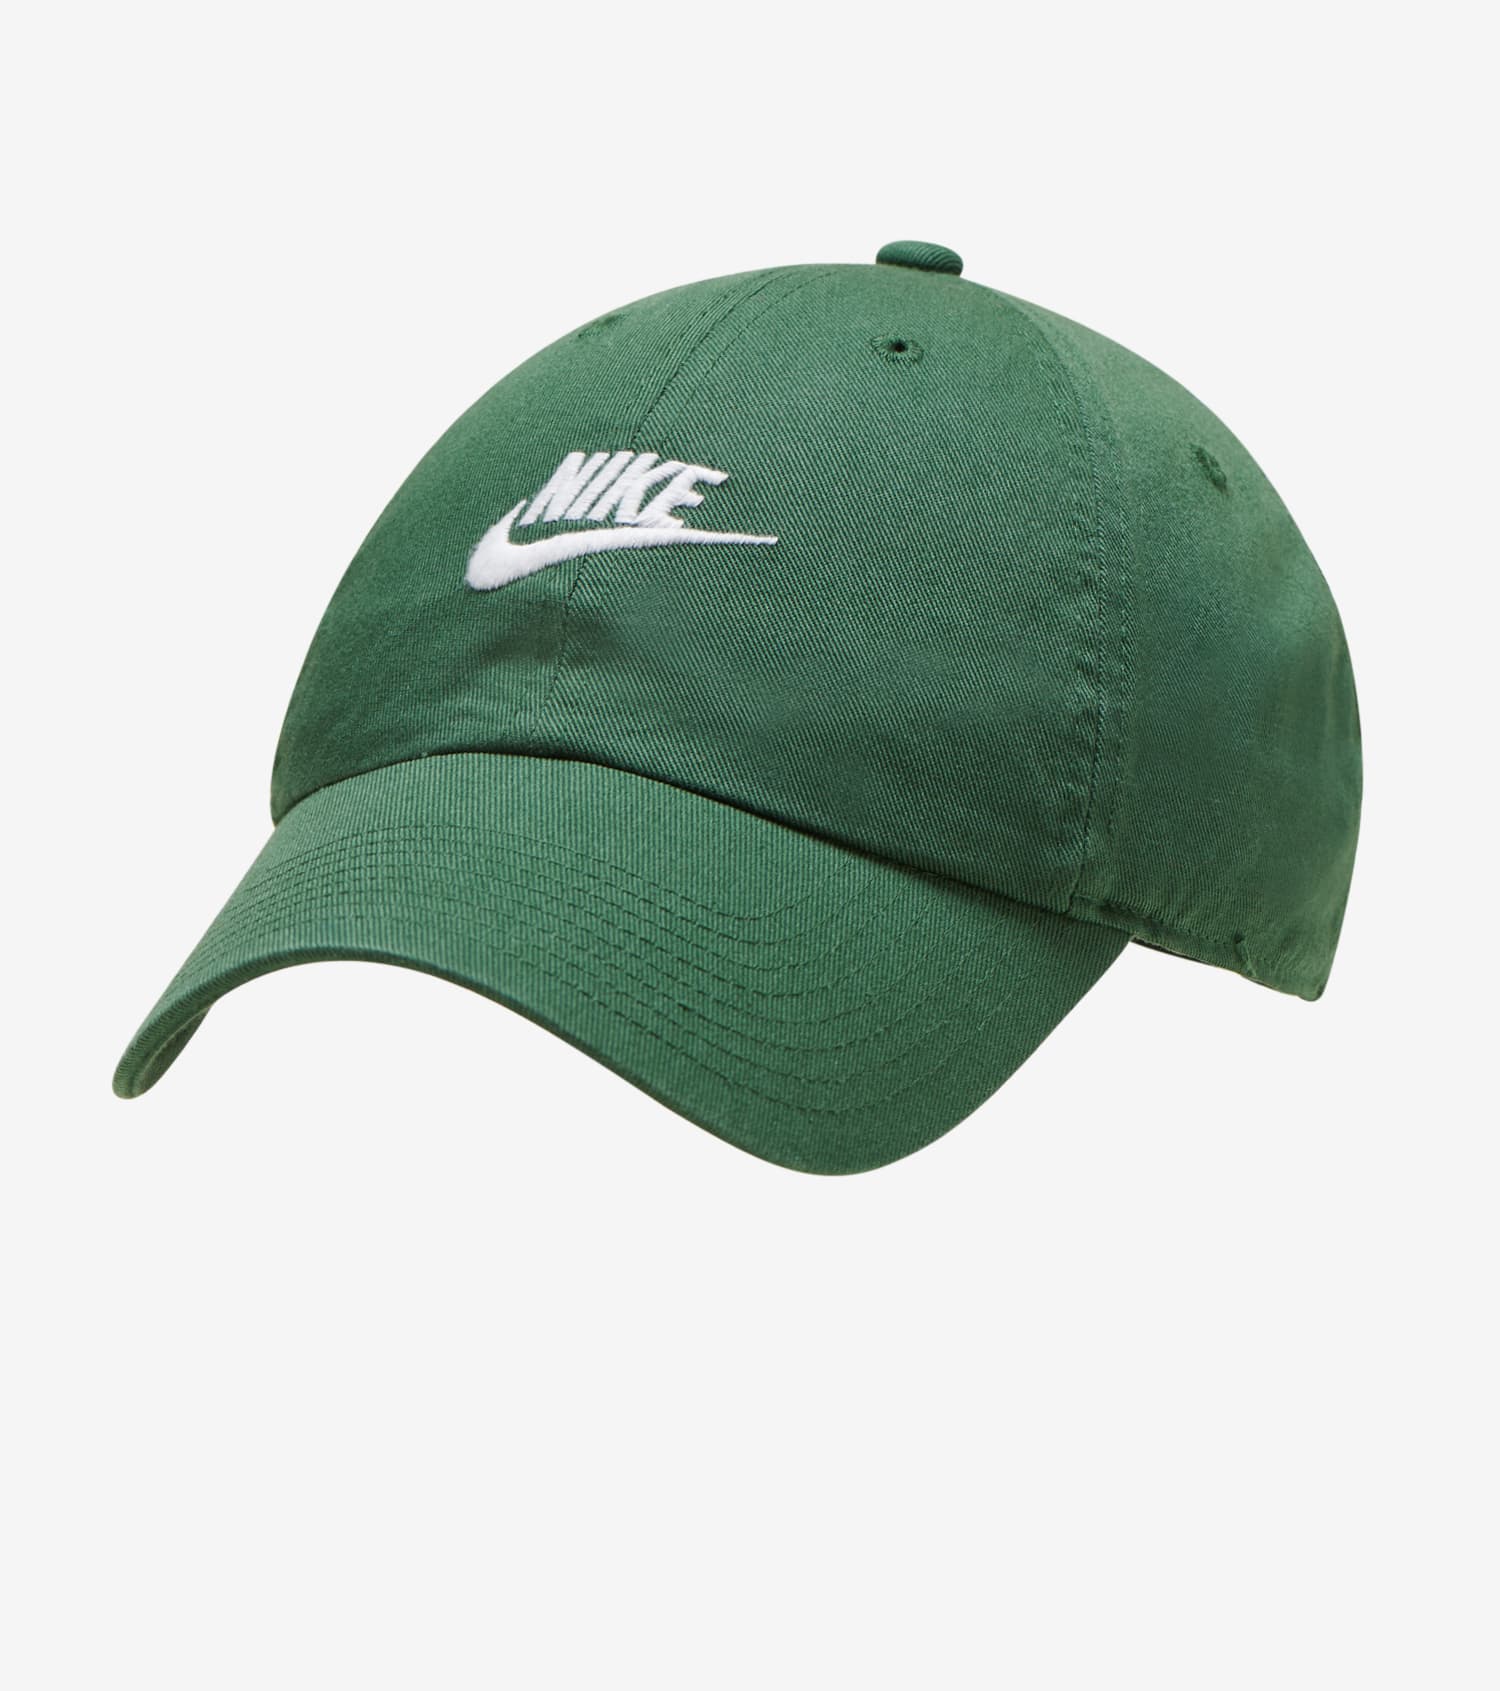 green nike cap